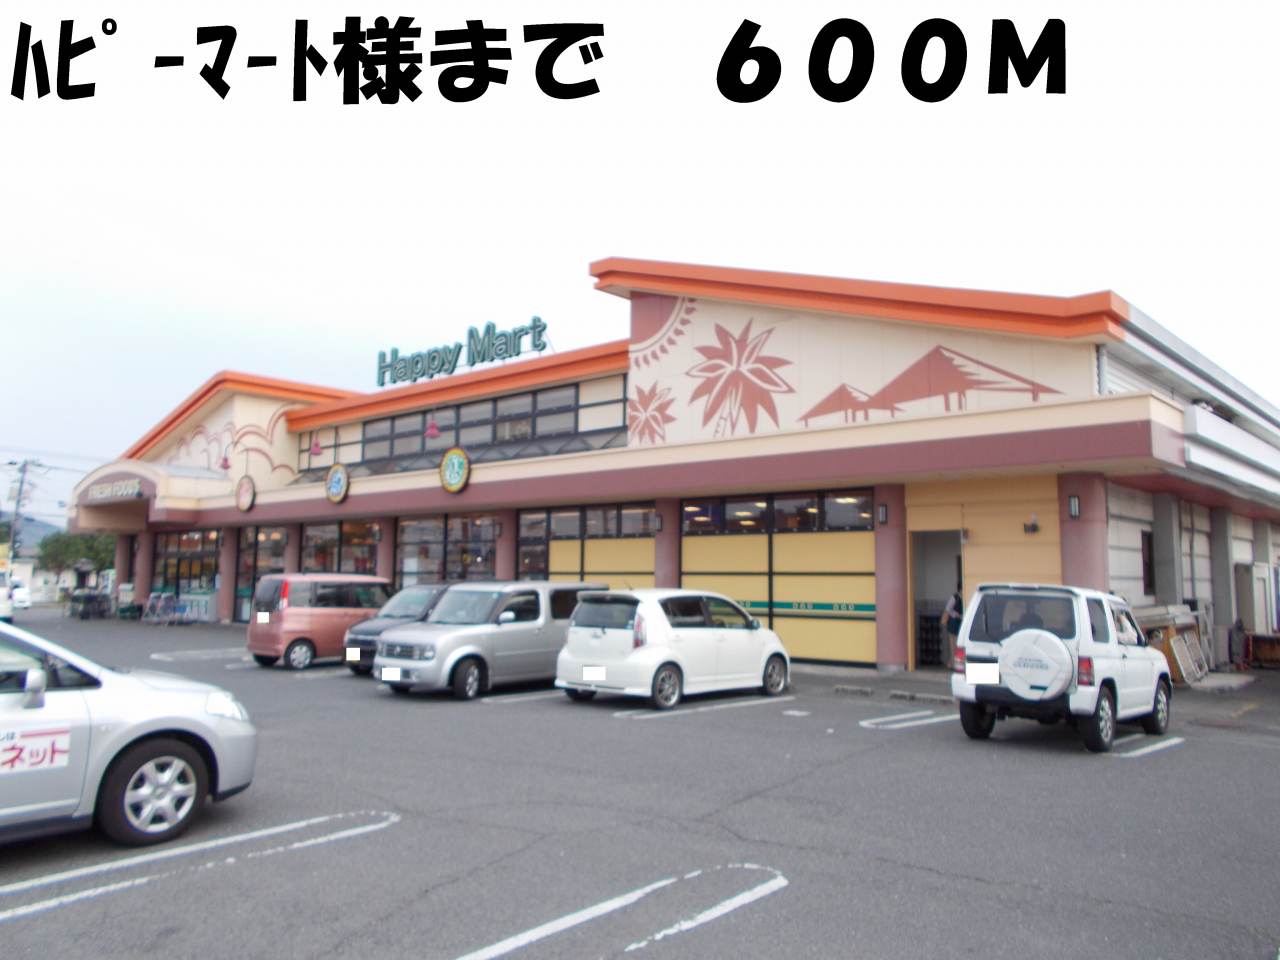 Supermarket. Hapimato 600m to like (Super)